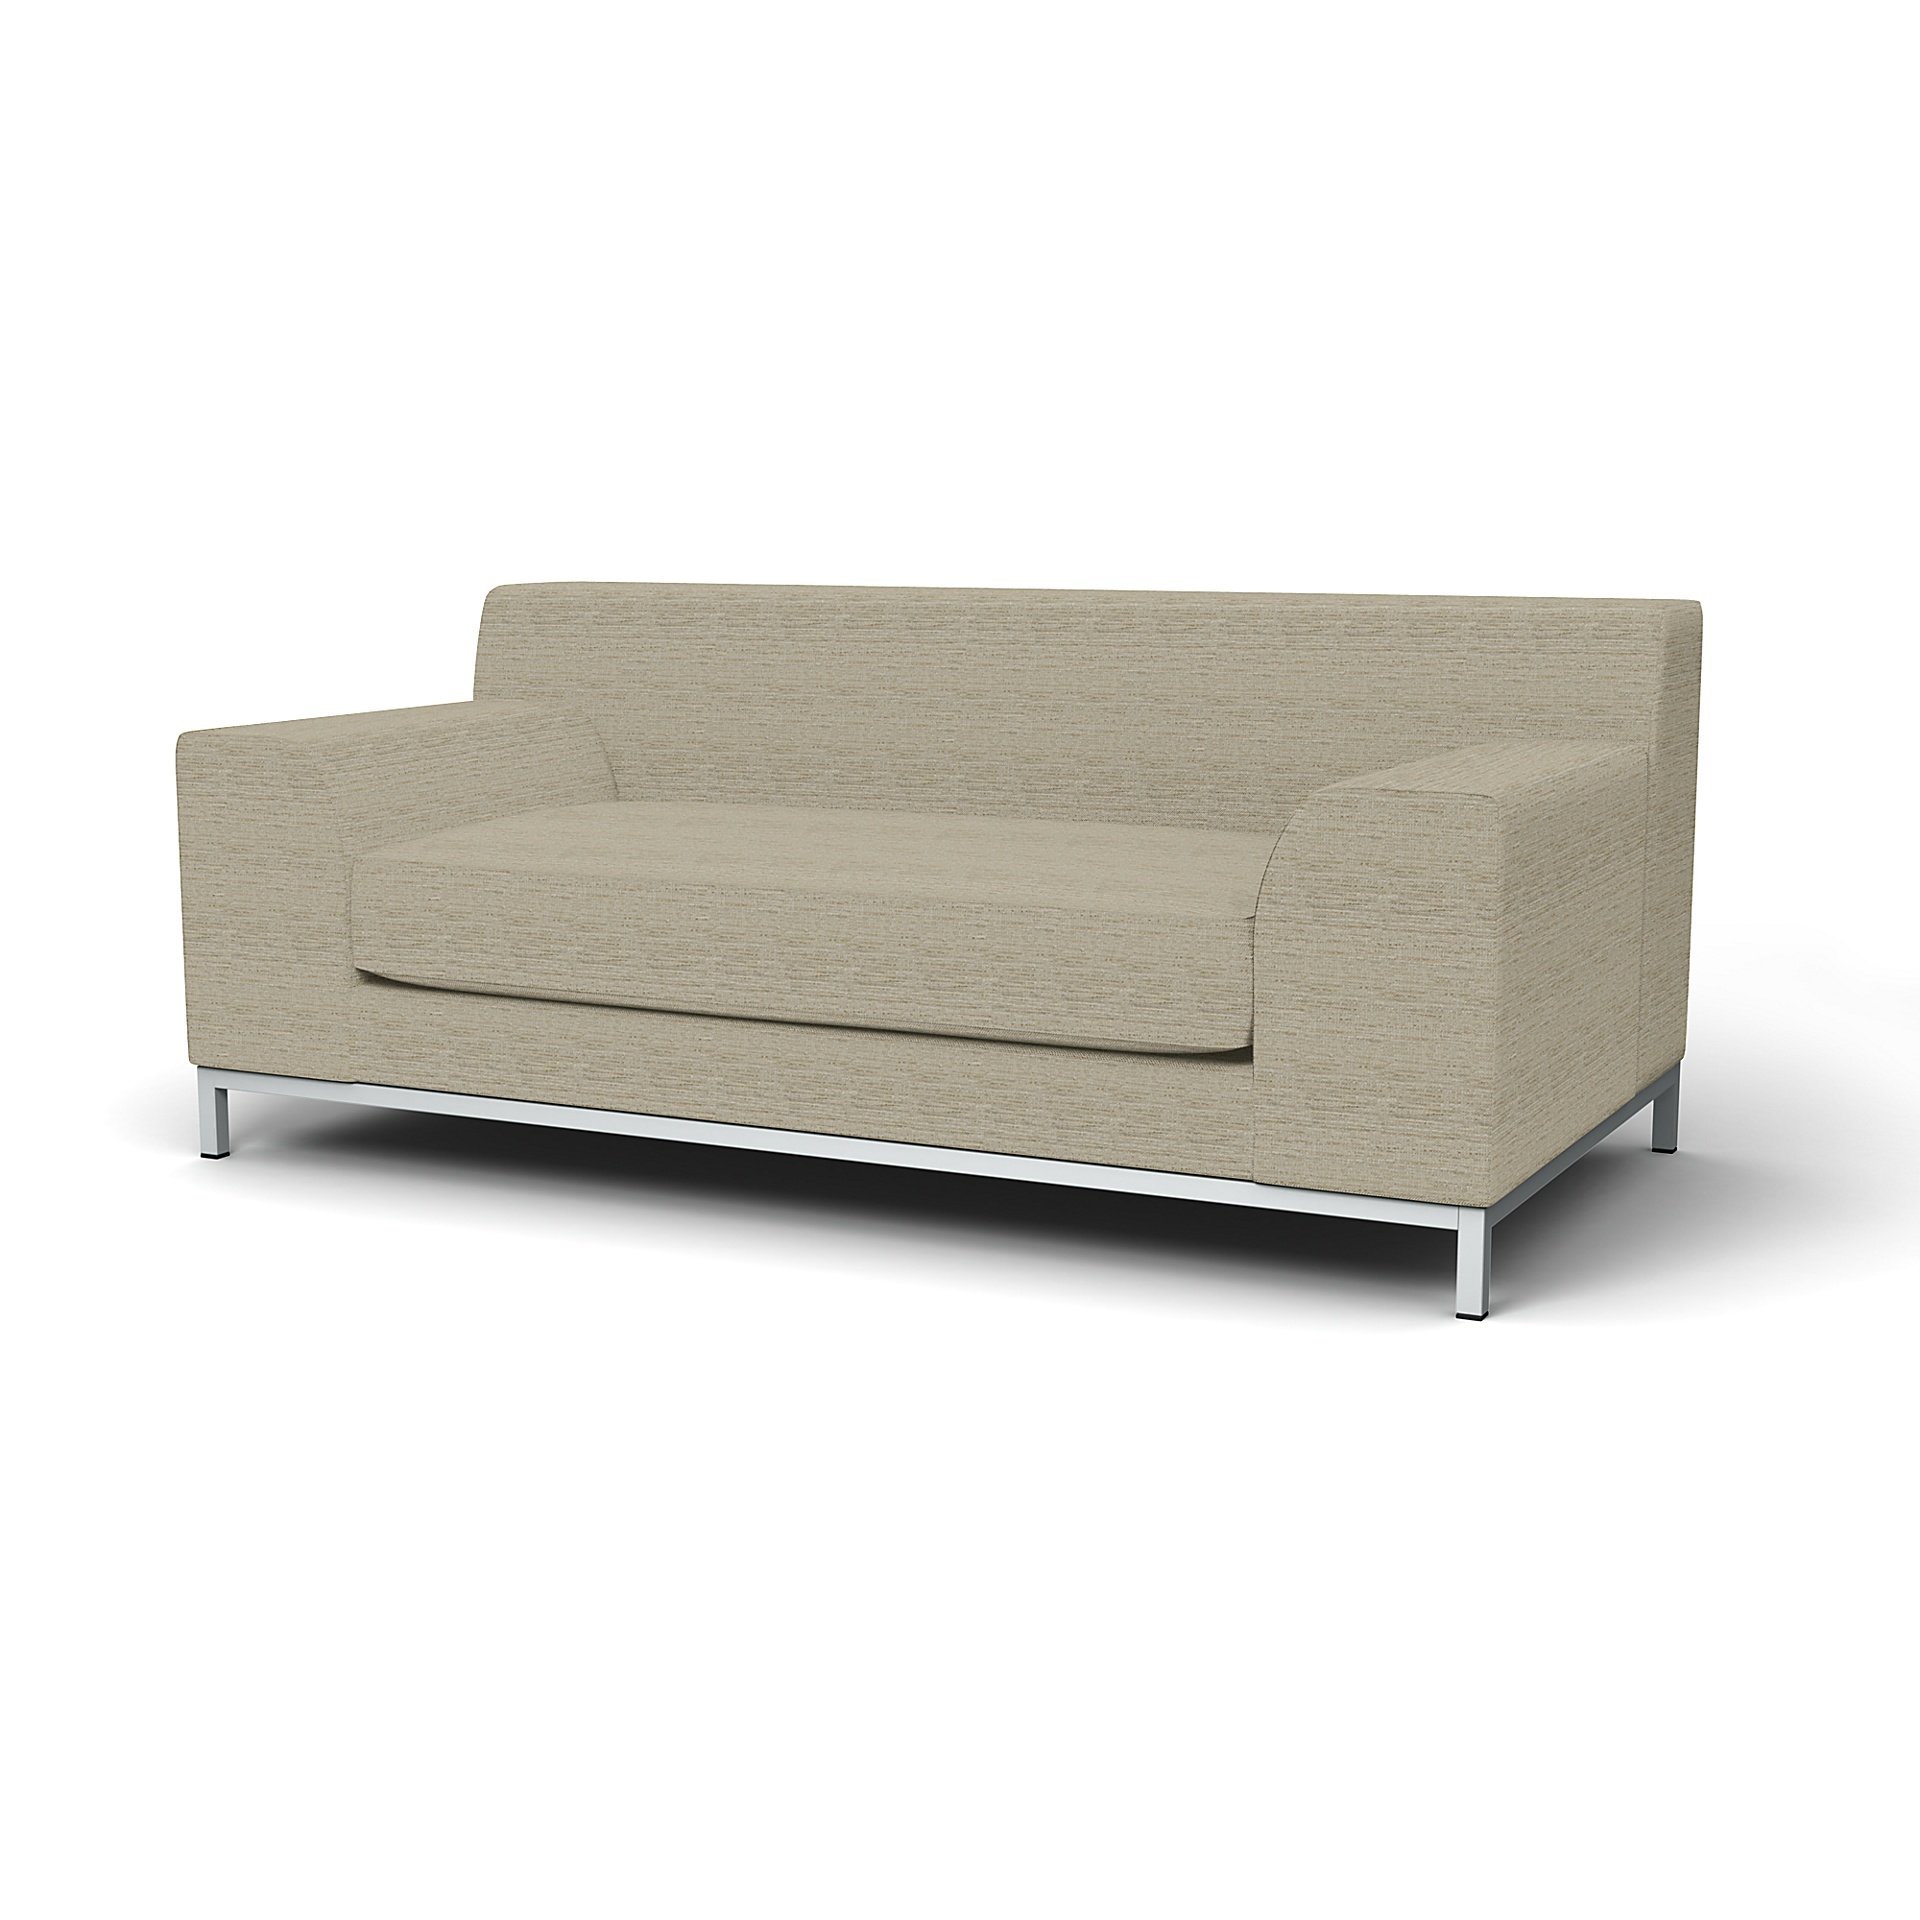 IKEA - Kramfors 2 Seater Sofa Cover, Light Sand, Boucle & Texture - Bemz